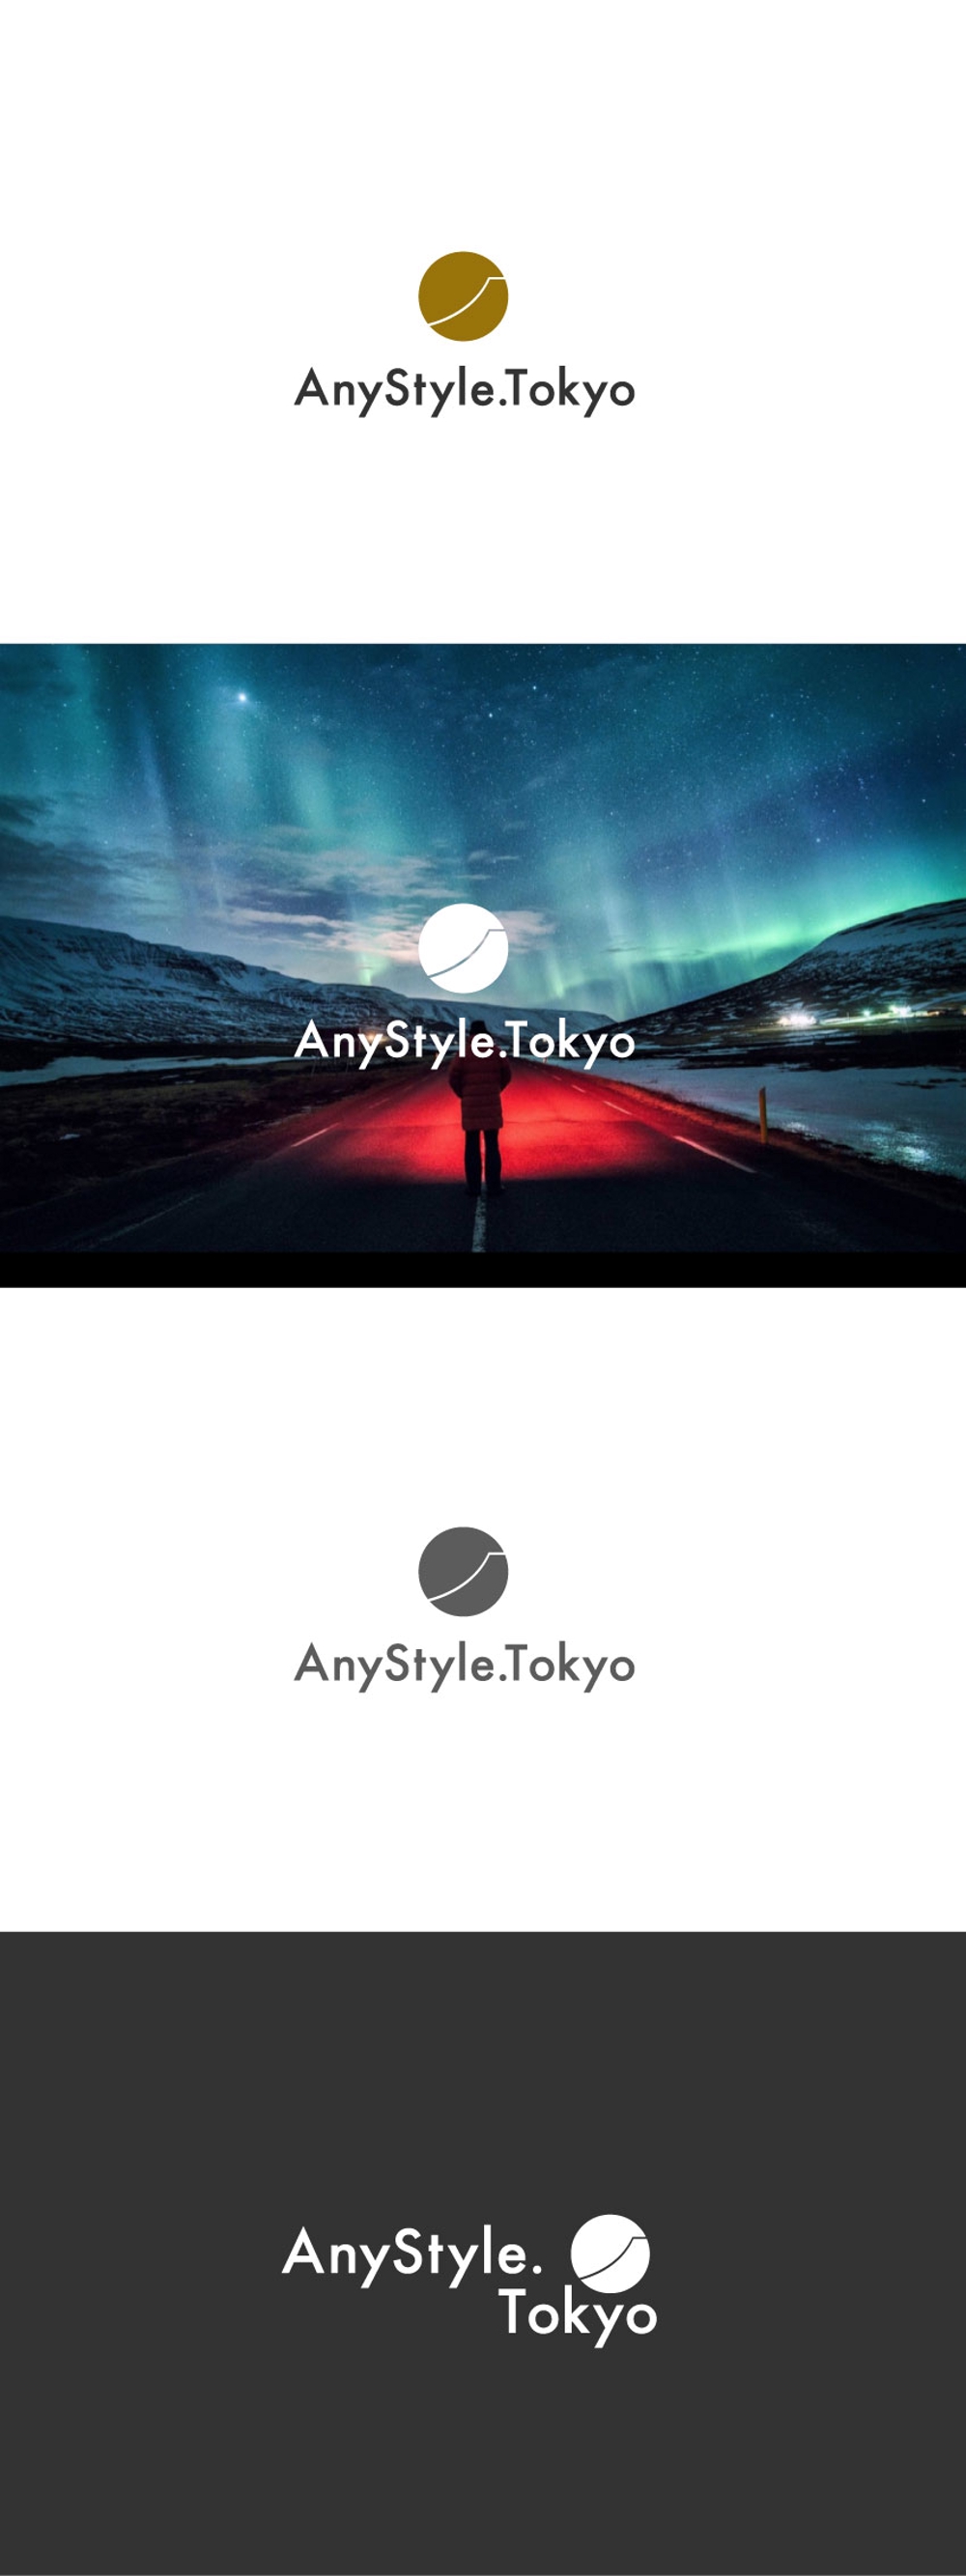 AnyStyle.Tokyo-02.jpg